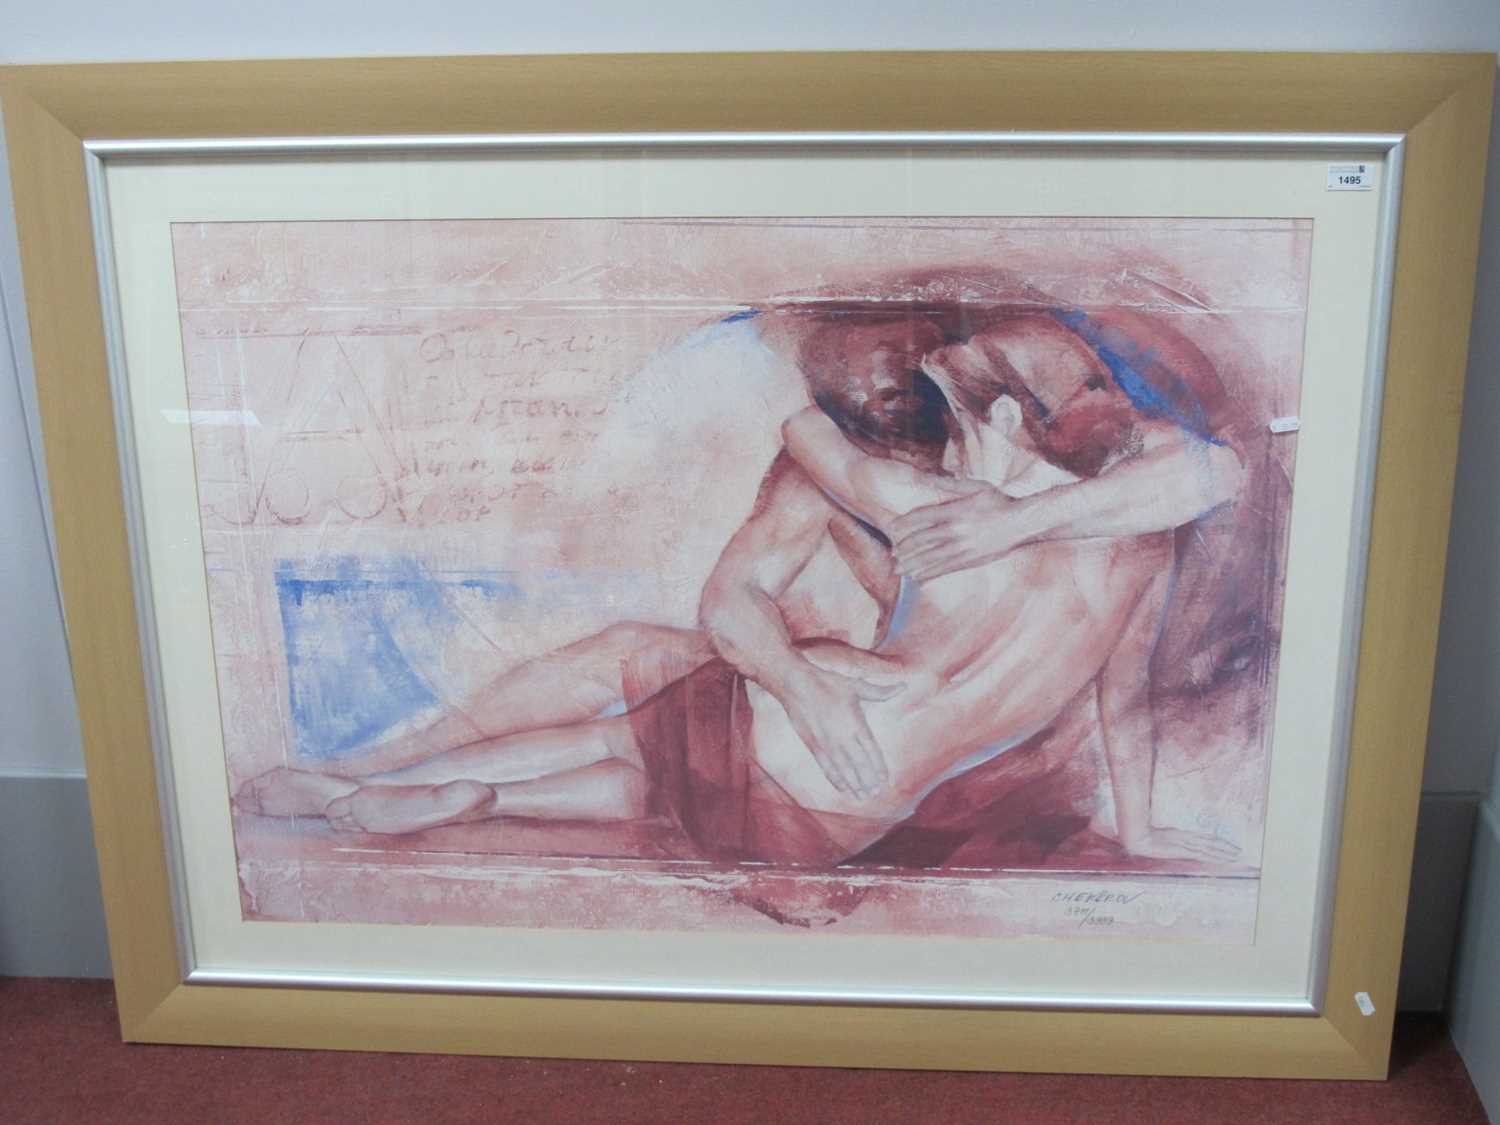 Chekirov, Romantic Embrace, limited edition colour print of 3999, 68 x 98cm.